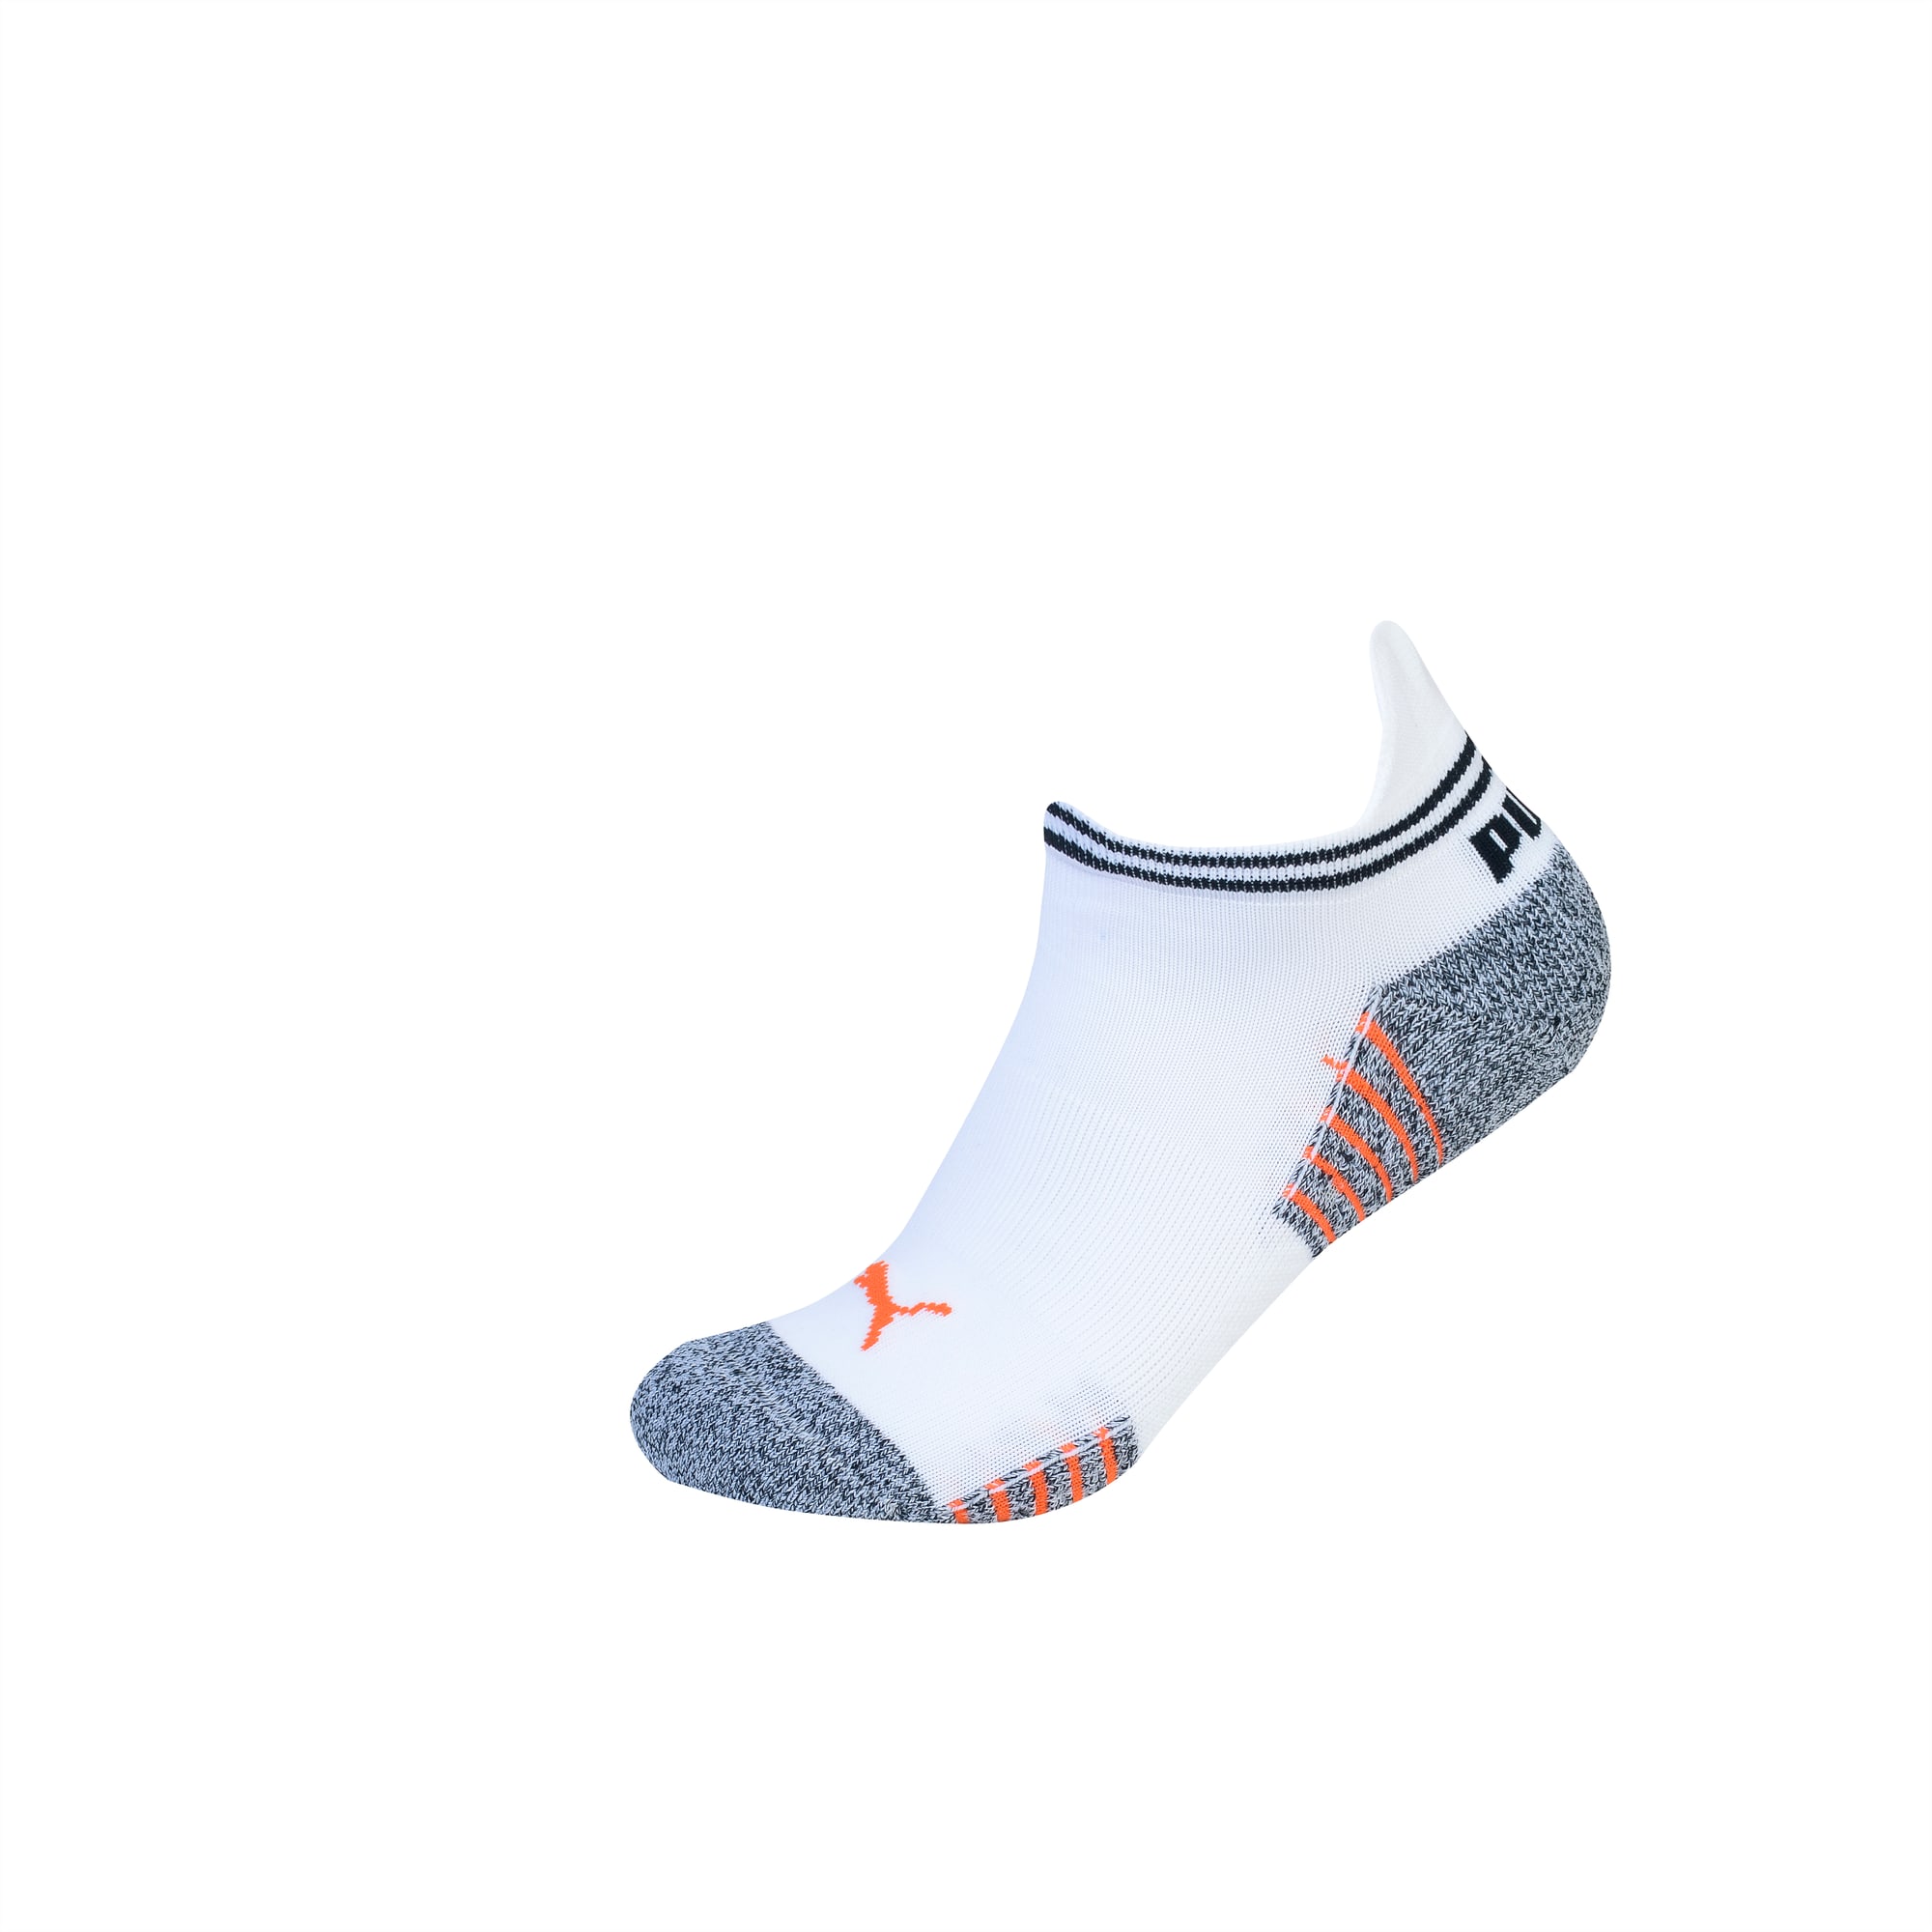 Basic Trainers Cushioned Socks, white / black, large-SEA